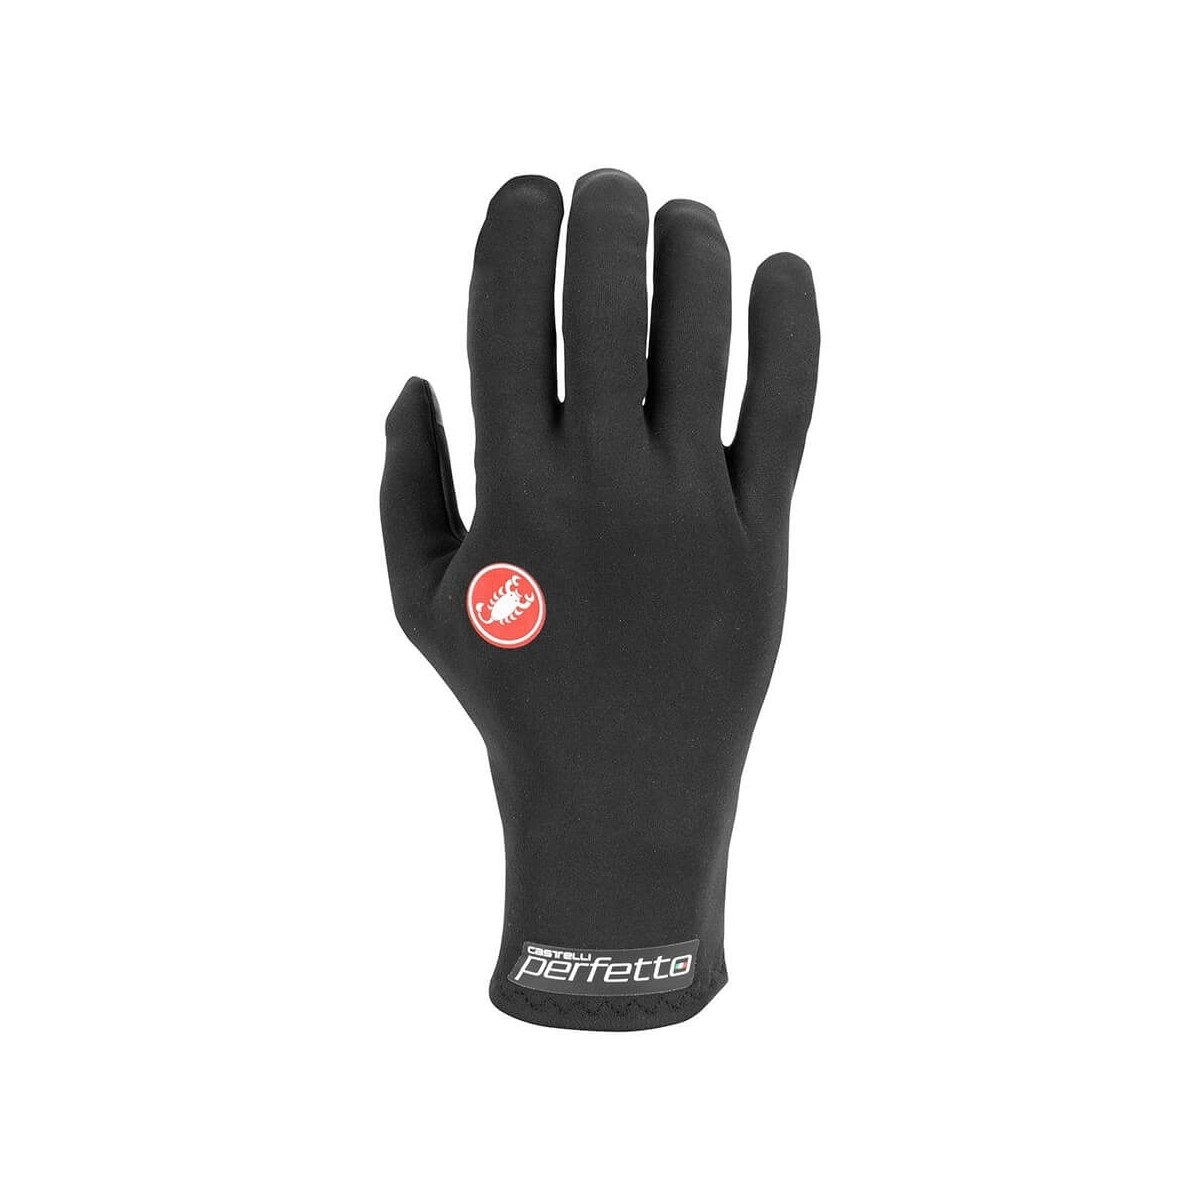 Castelli Perfetto Ros Gloves Black, Size 2XL